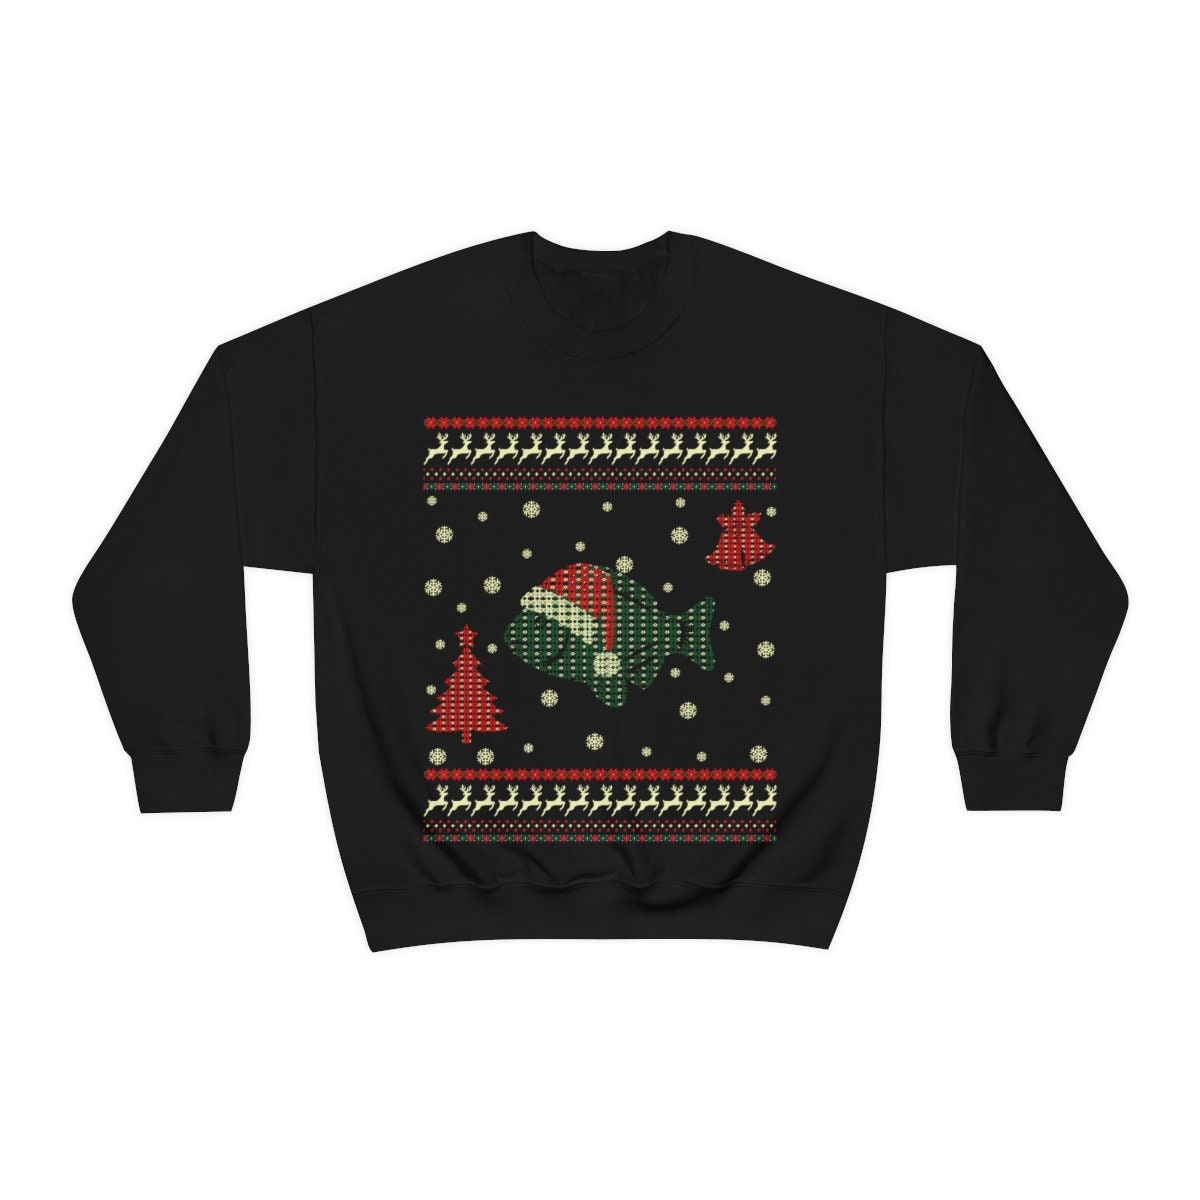 Merry fishmas long sleeve, funny ugly sweater, fishing christmas